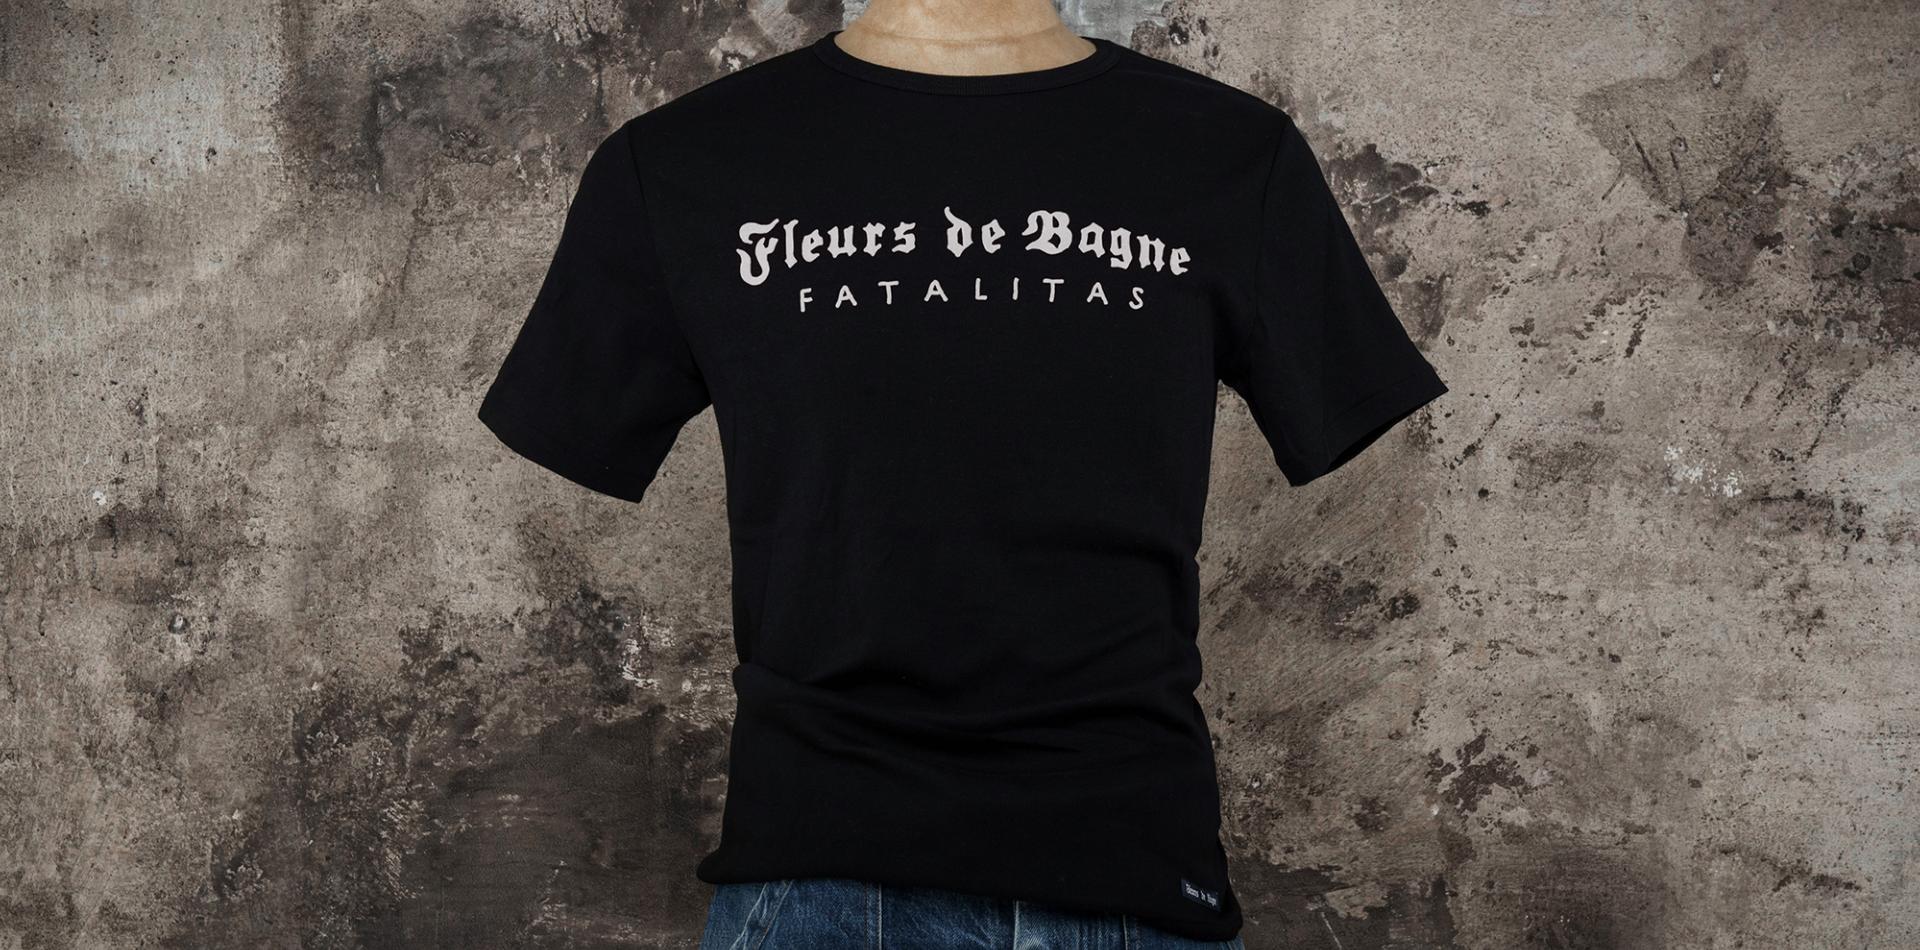 THE TEE "FLEURS DE BAGNE - FATALITAS"